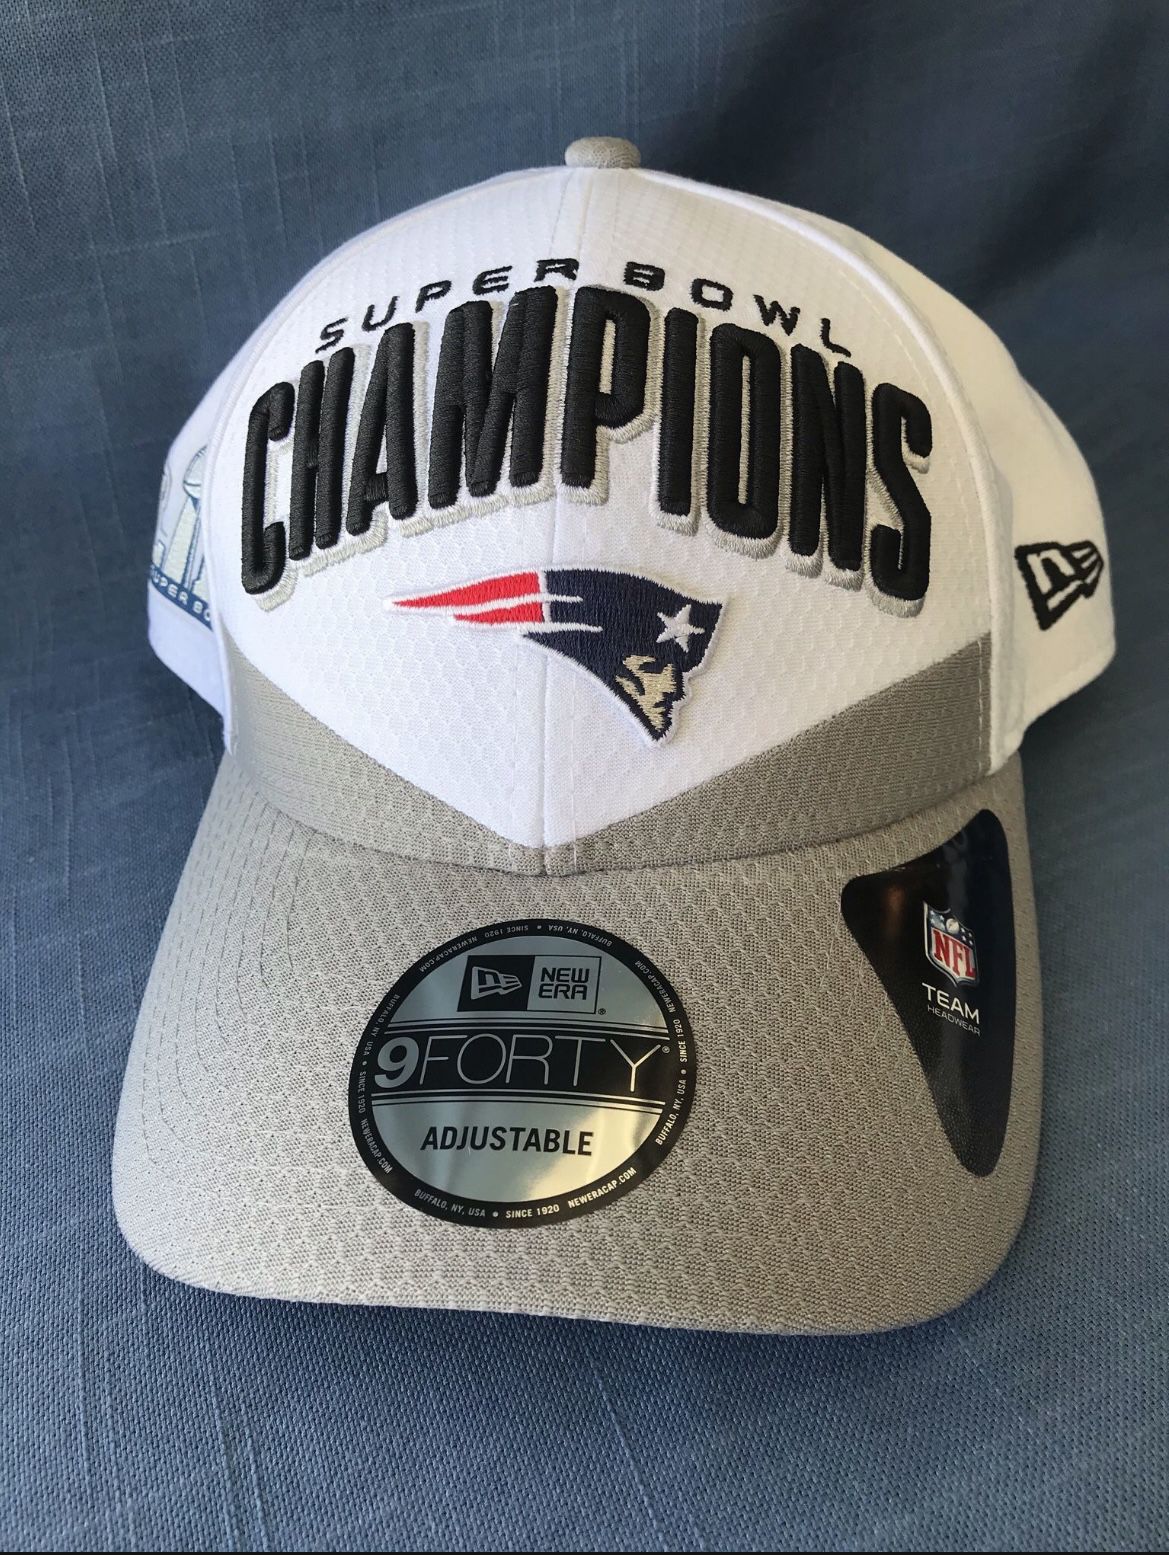 New England Patriots “Supet Bowl LIII Champions” (2019) hat - Brand New! 